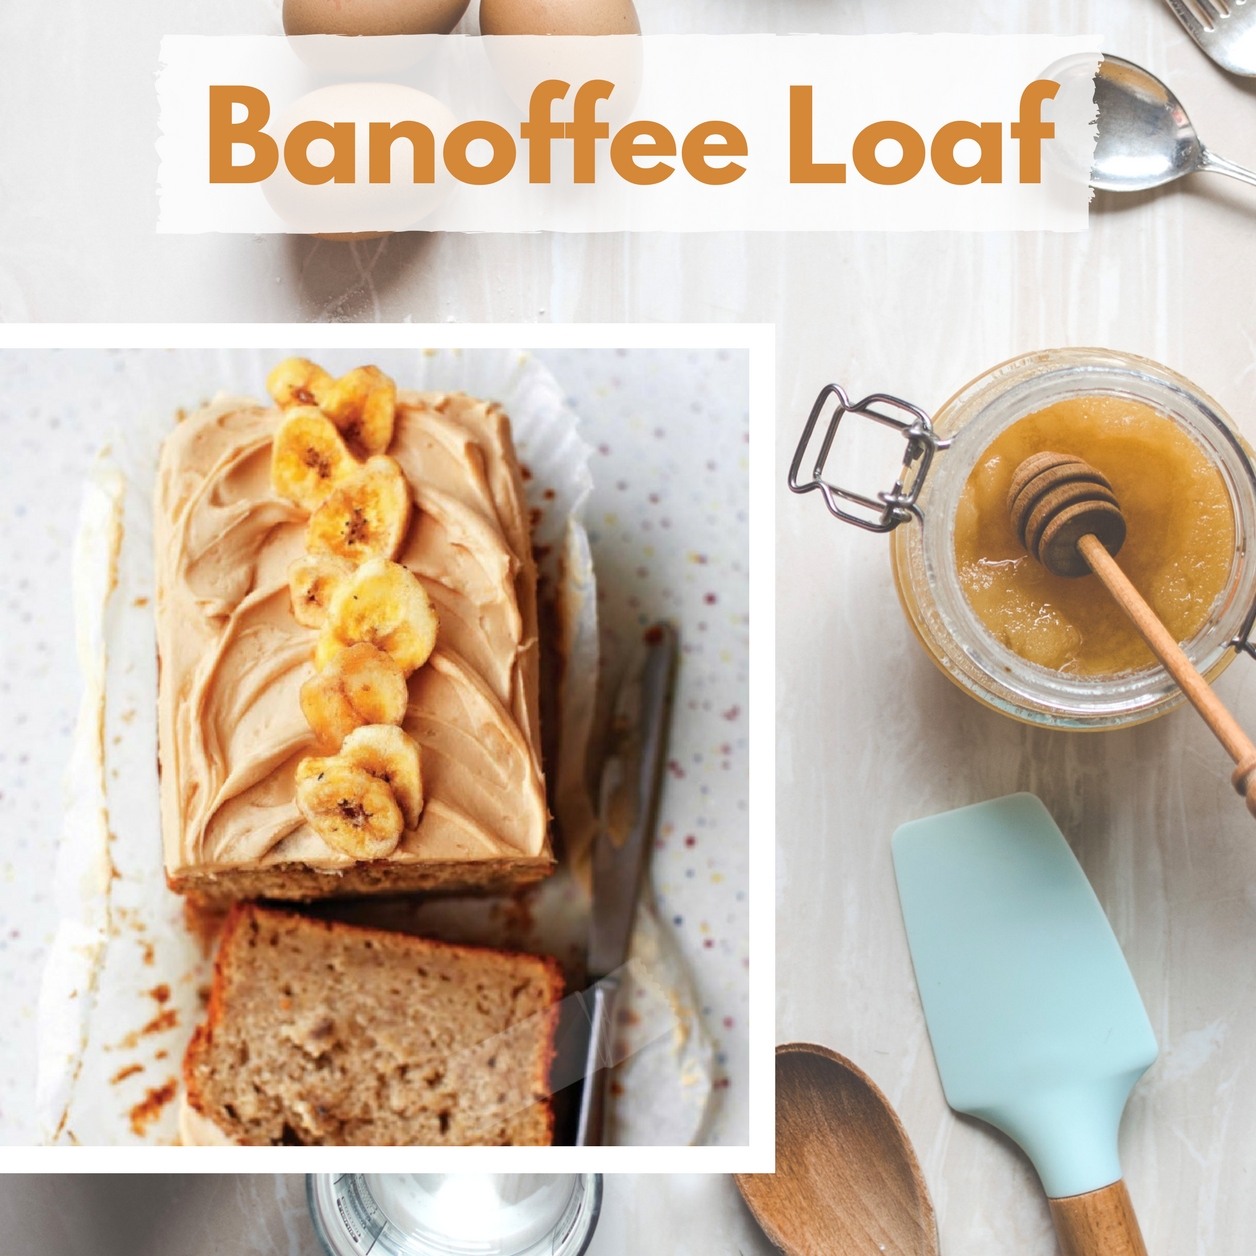 Baking Heaven's Banoffee Loaf